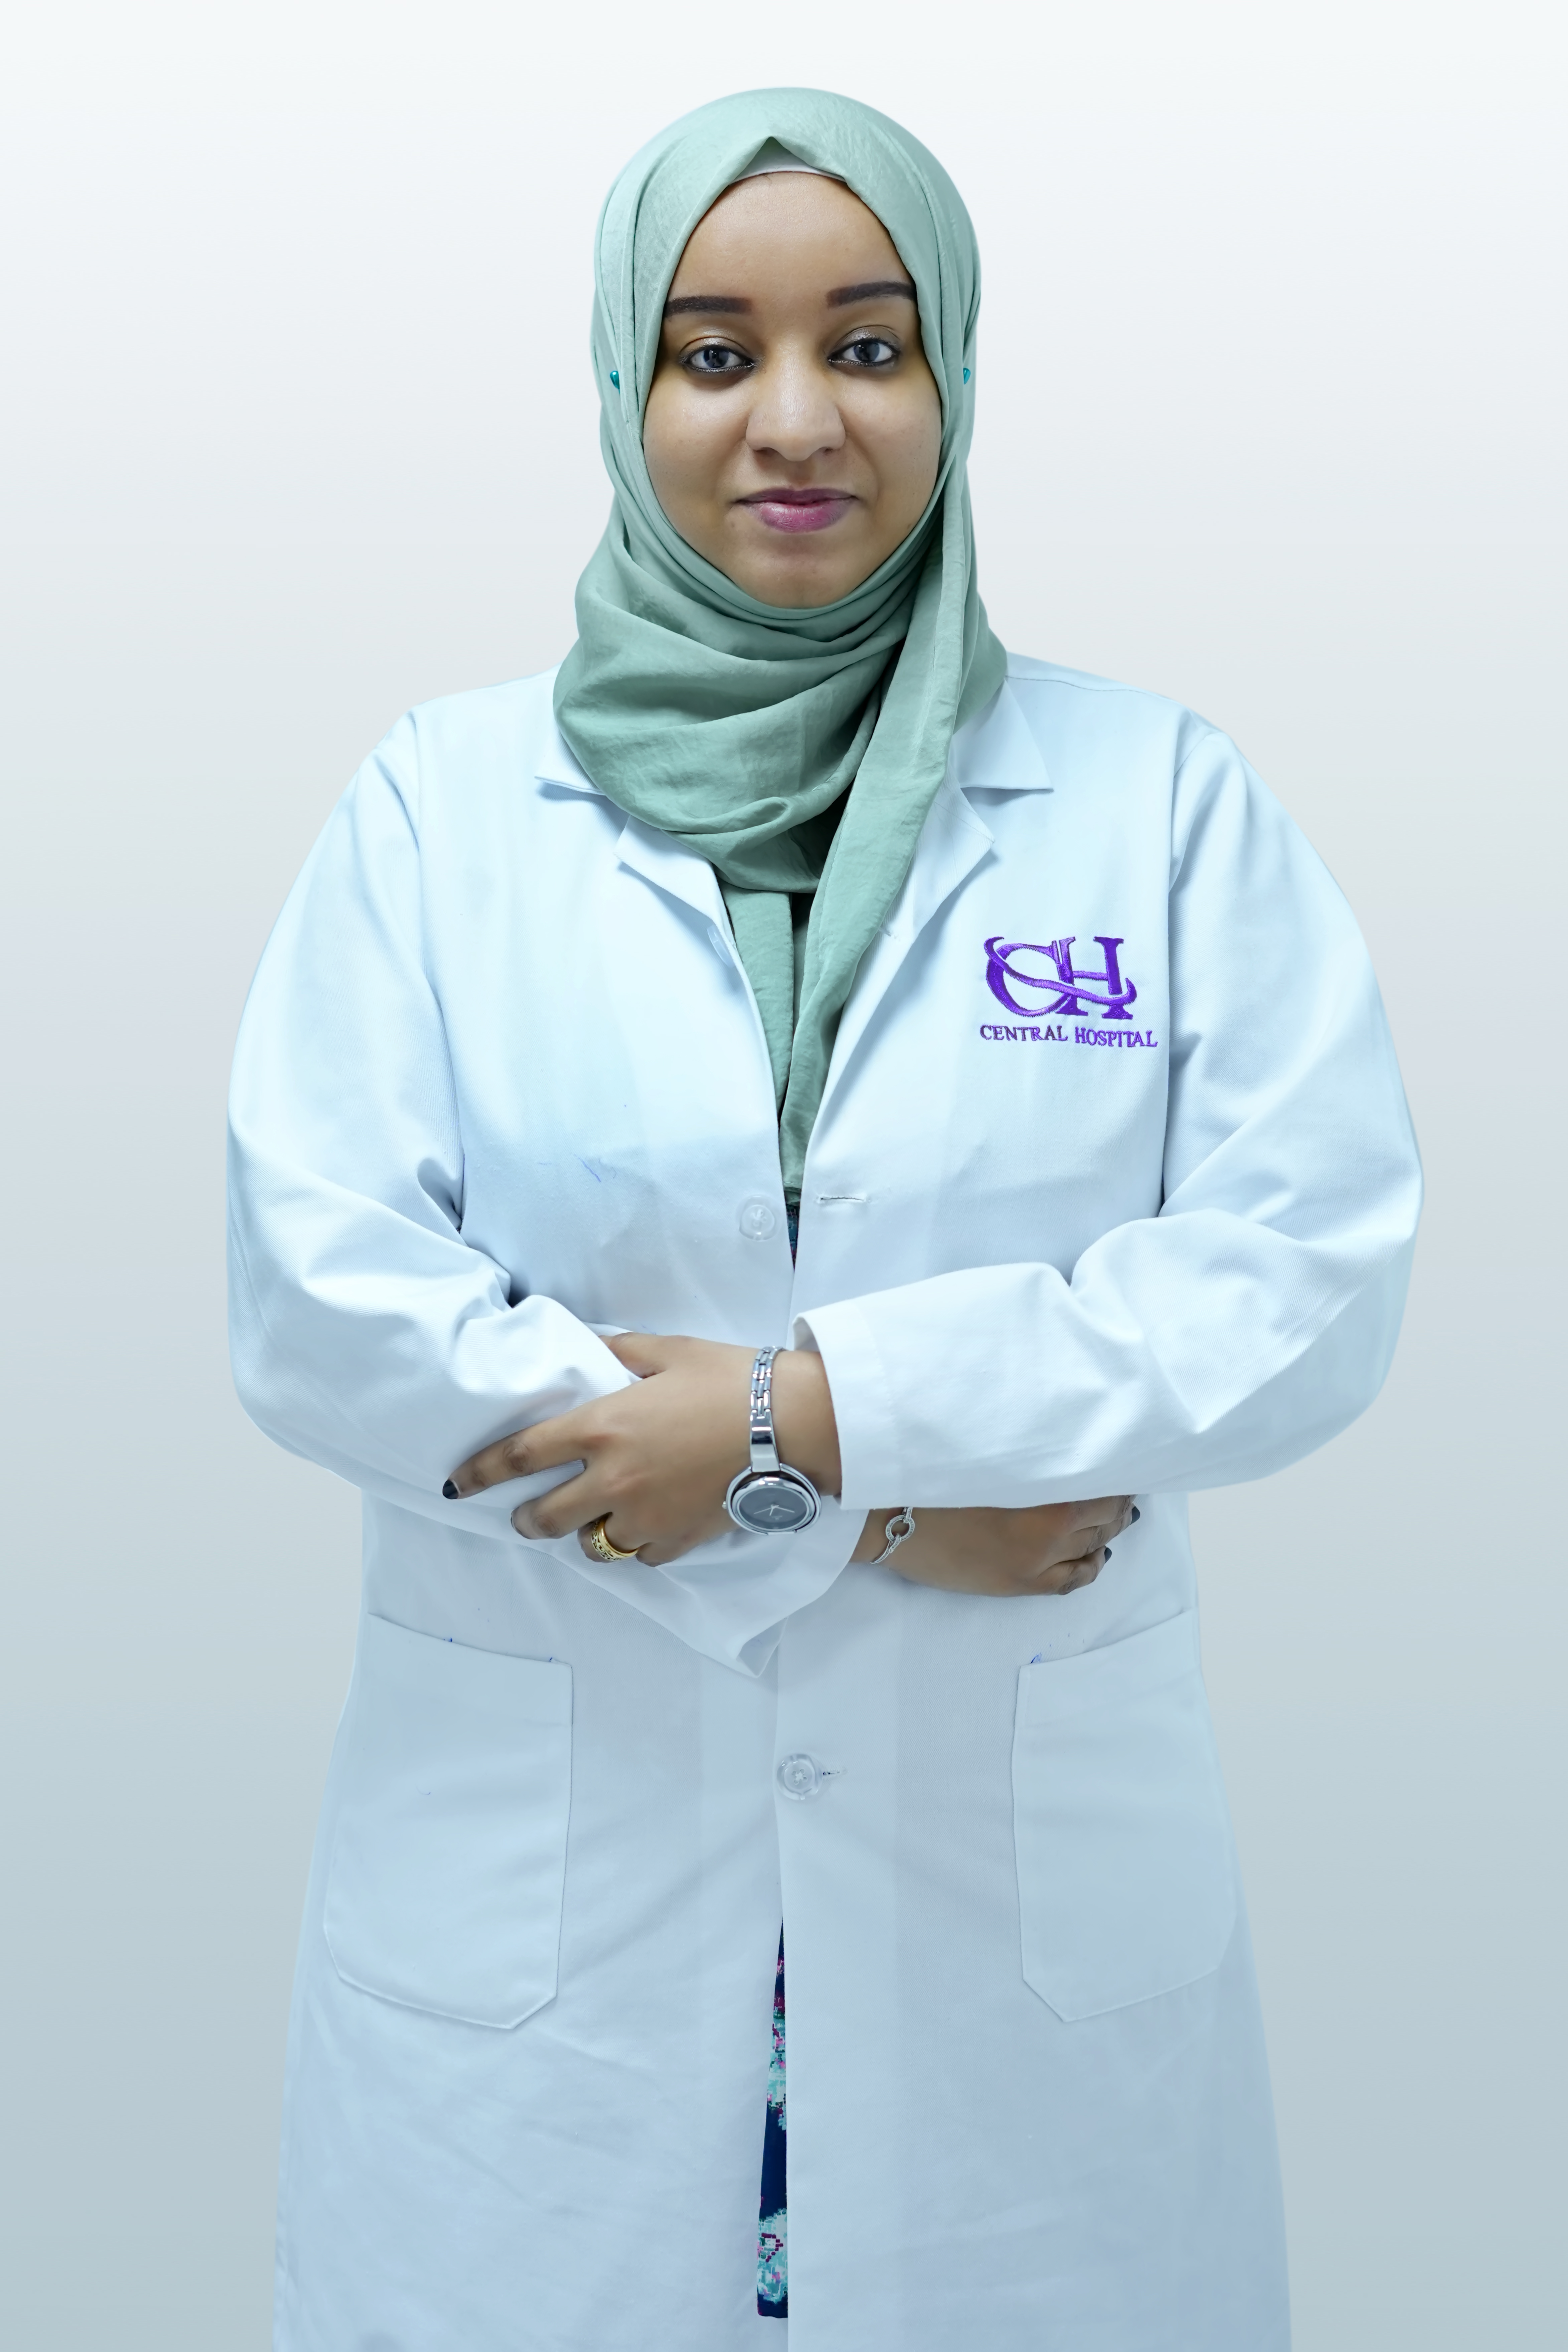 Dr. Alaa Yagoup Mohammed Salih